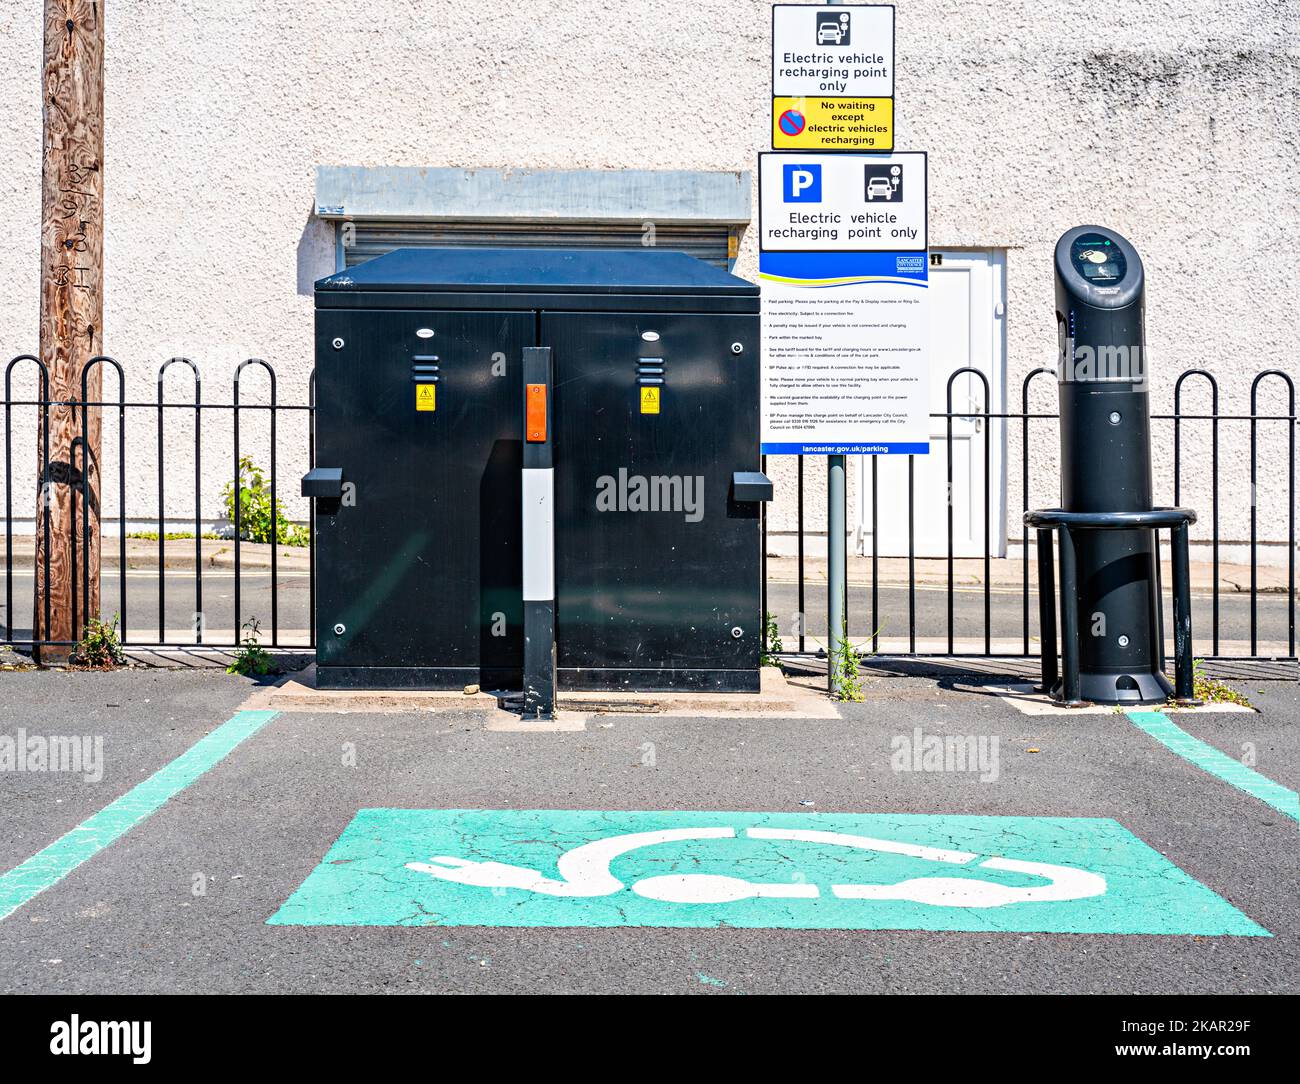 Electric vehicle recharging point in Morecambe, Lancashire, UK Stock Photo